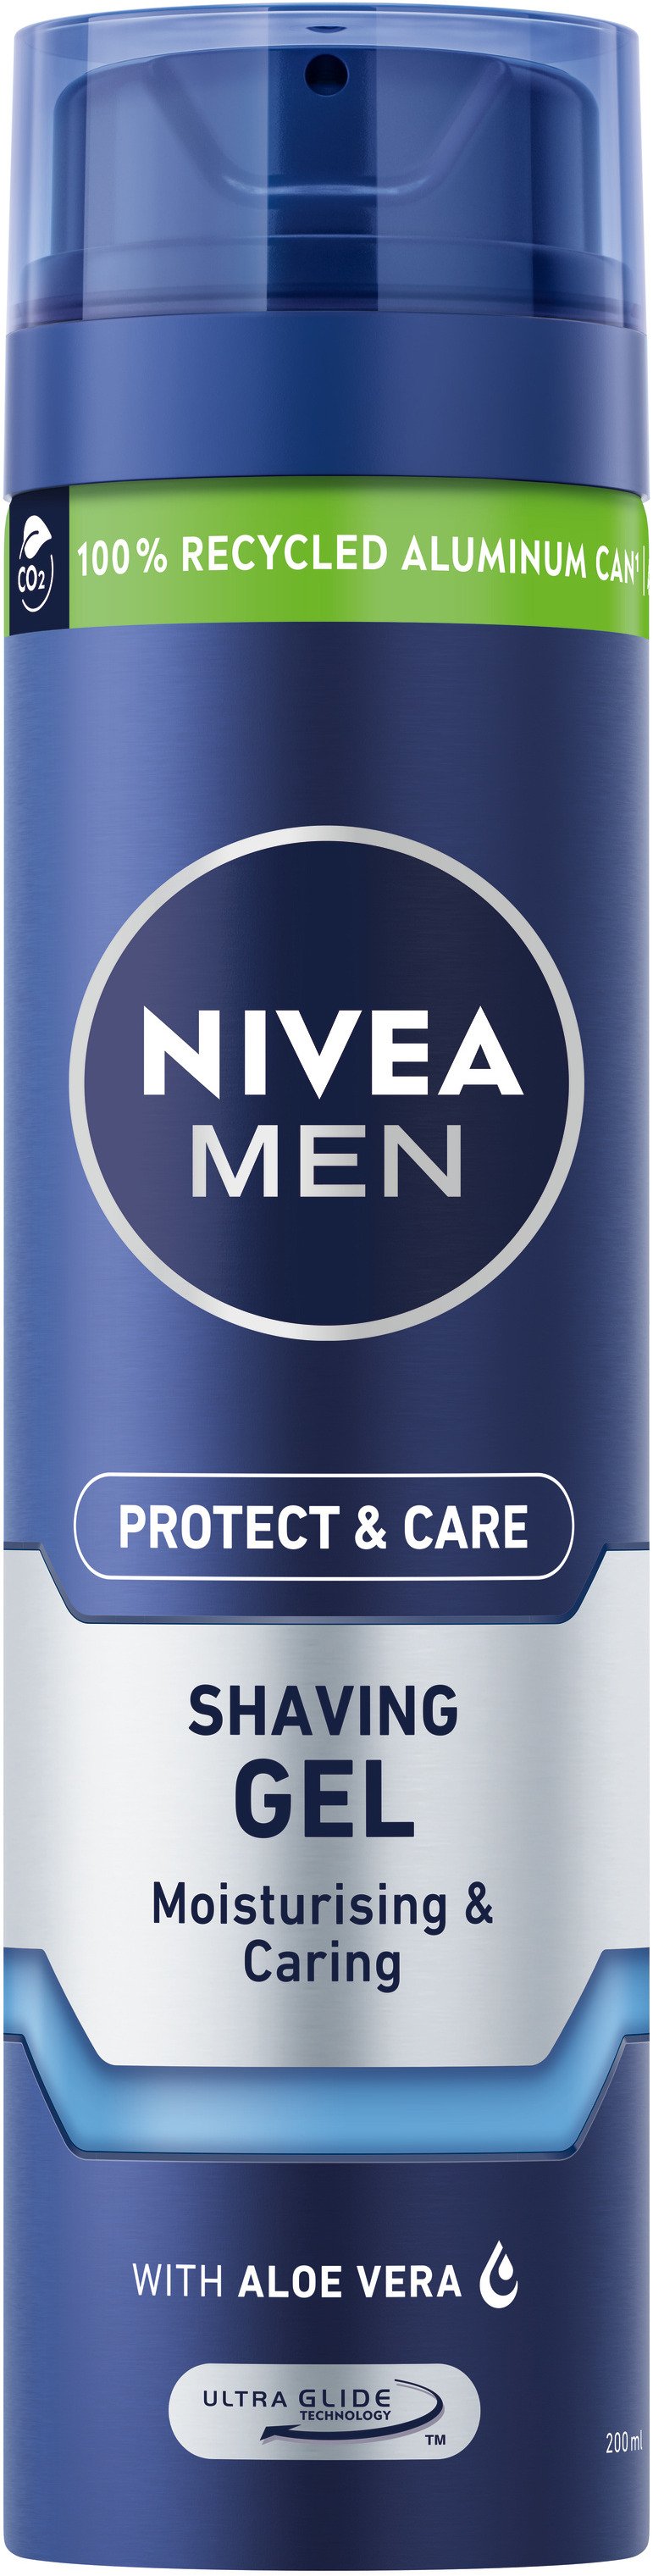 NIVEA MEN Rakgel Protect & Care Shaving Gel 200ml